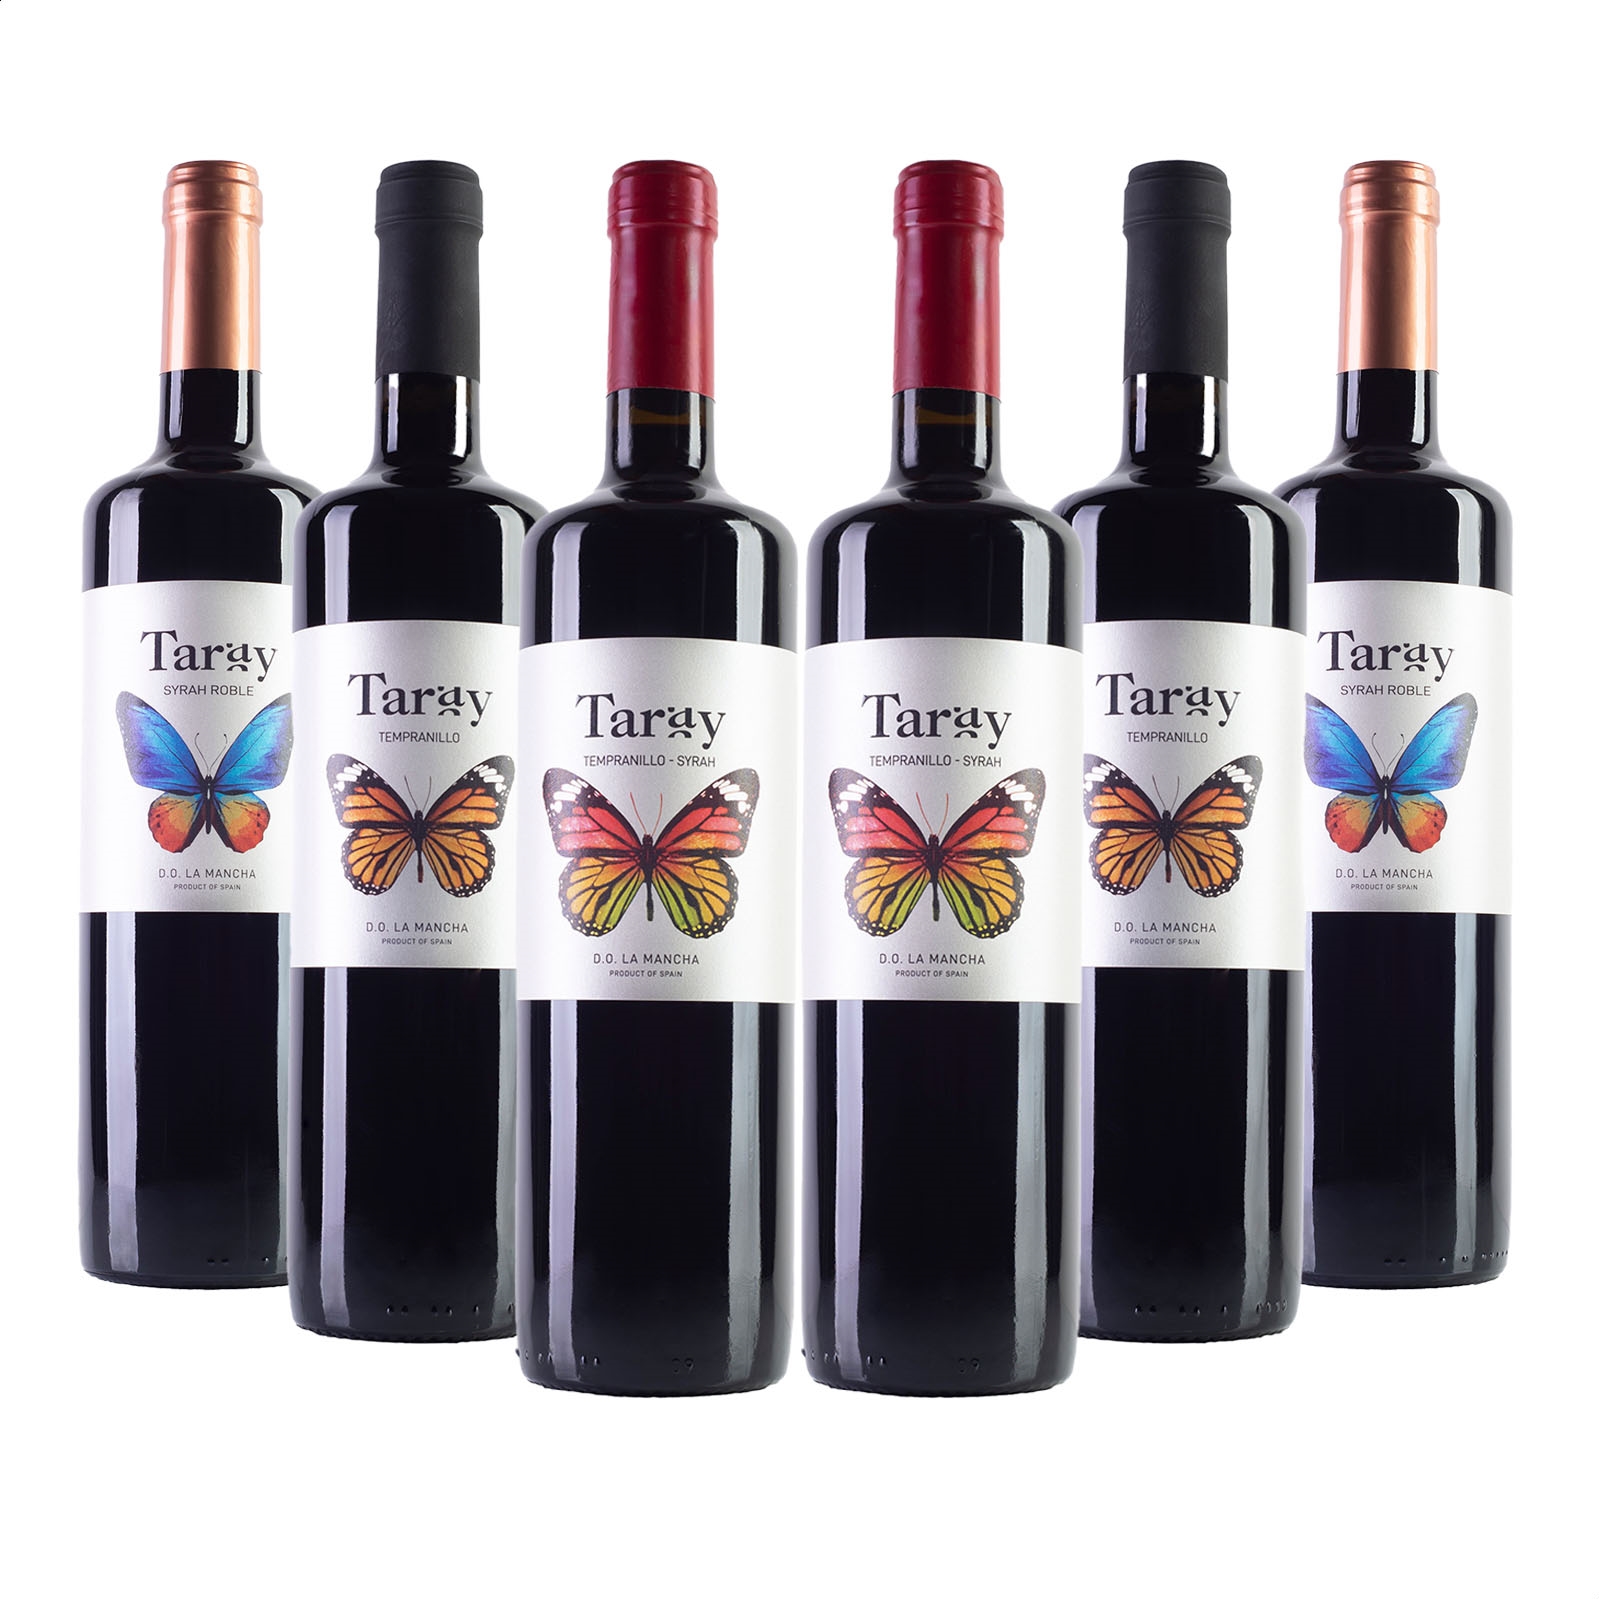 Bodegas Taray – Lote selección vinos tintos D.O.P. La Mancha 75cl, 6uds